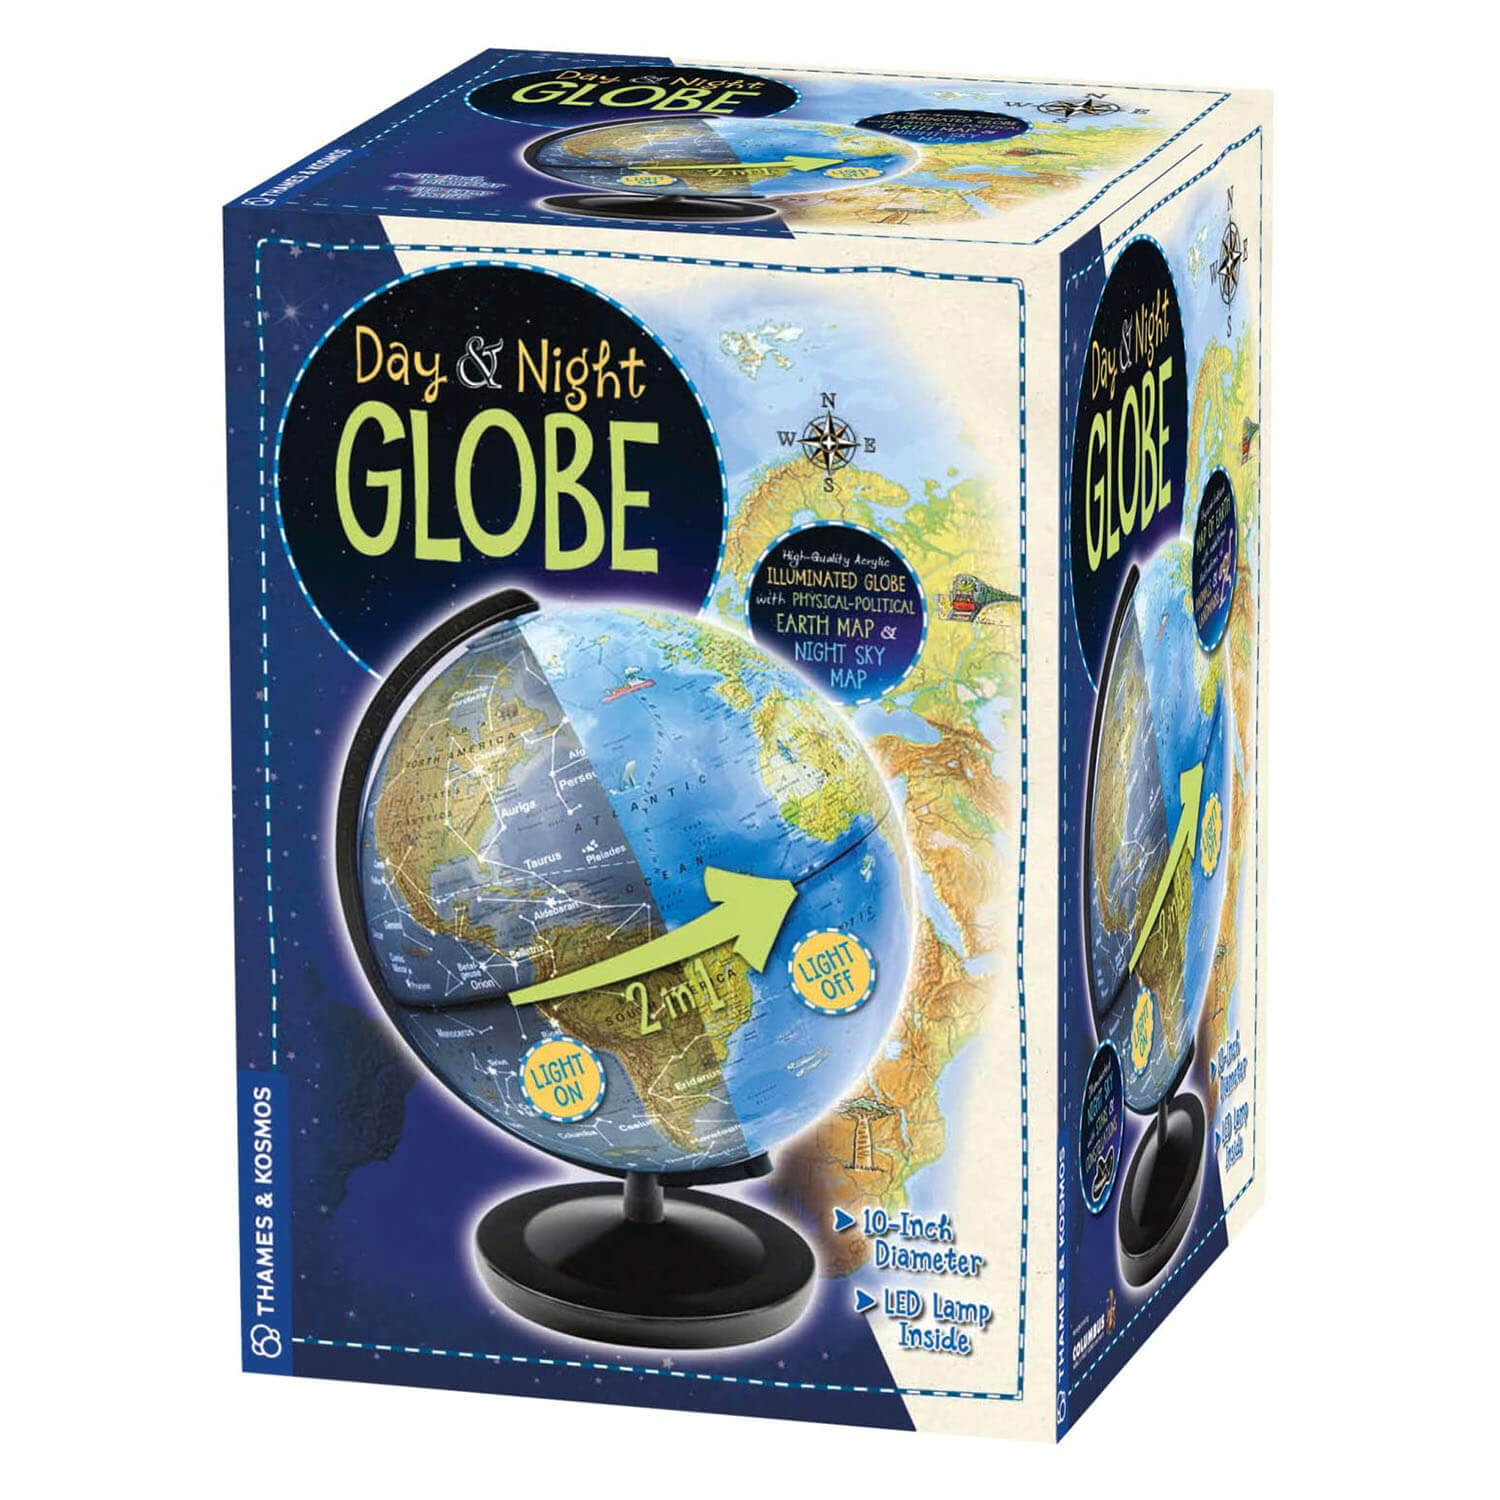 Thames and Kosmos Day & Night Globe